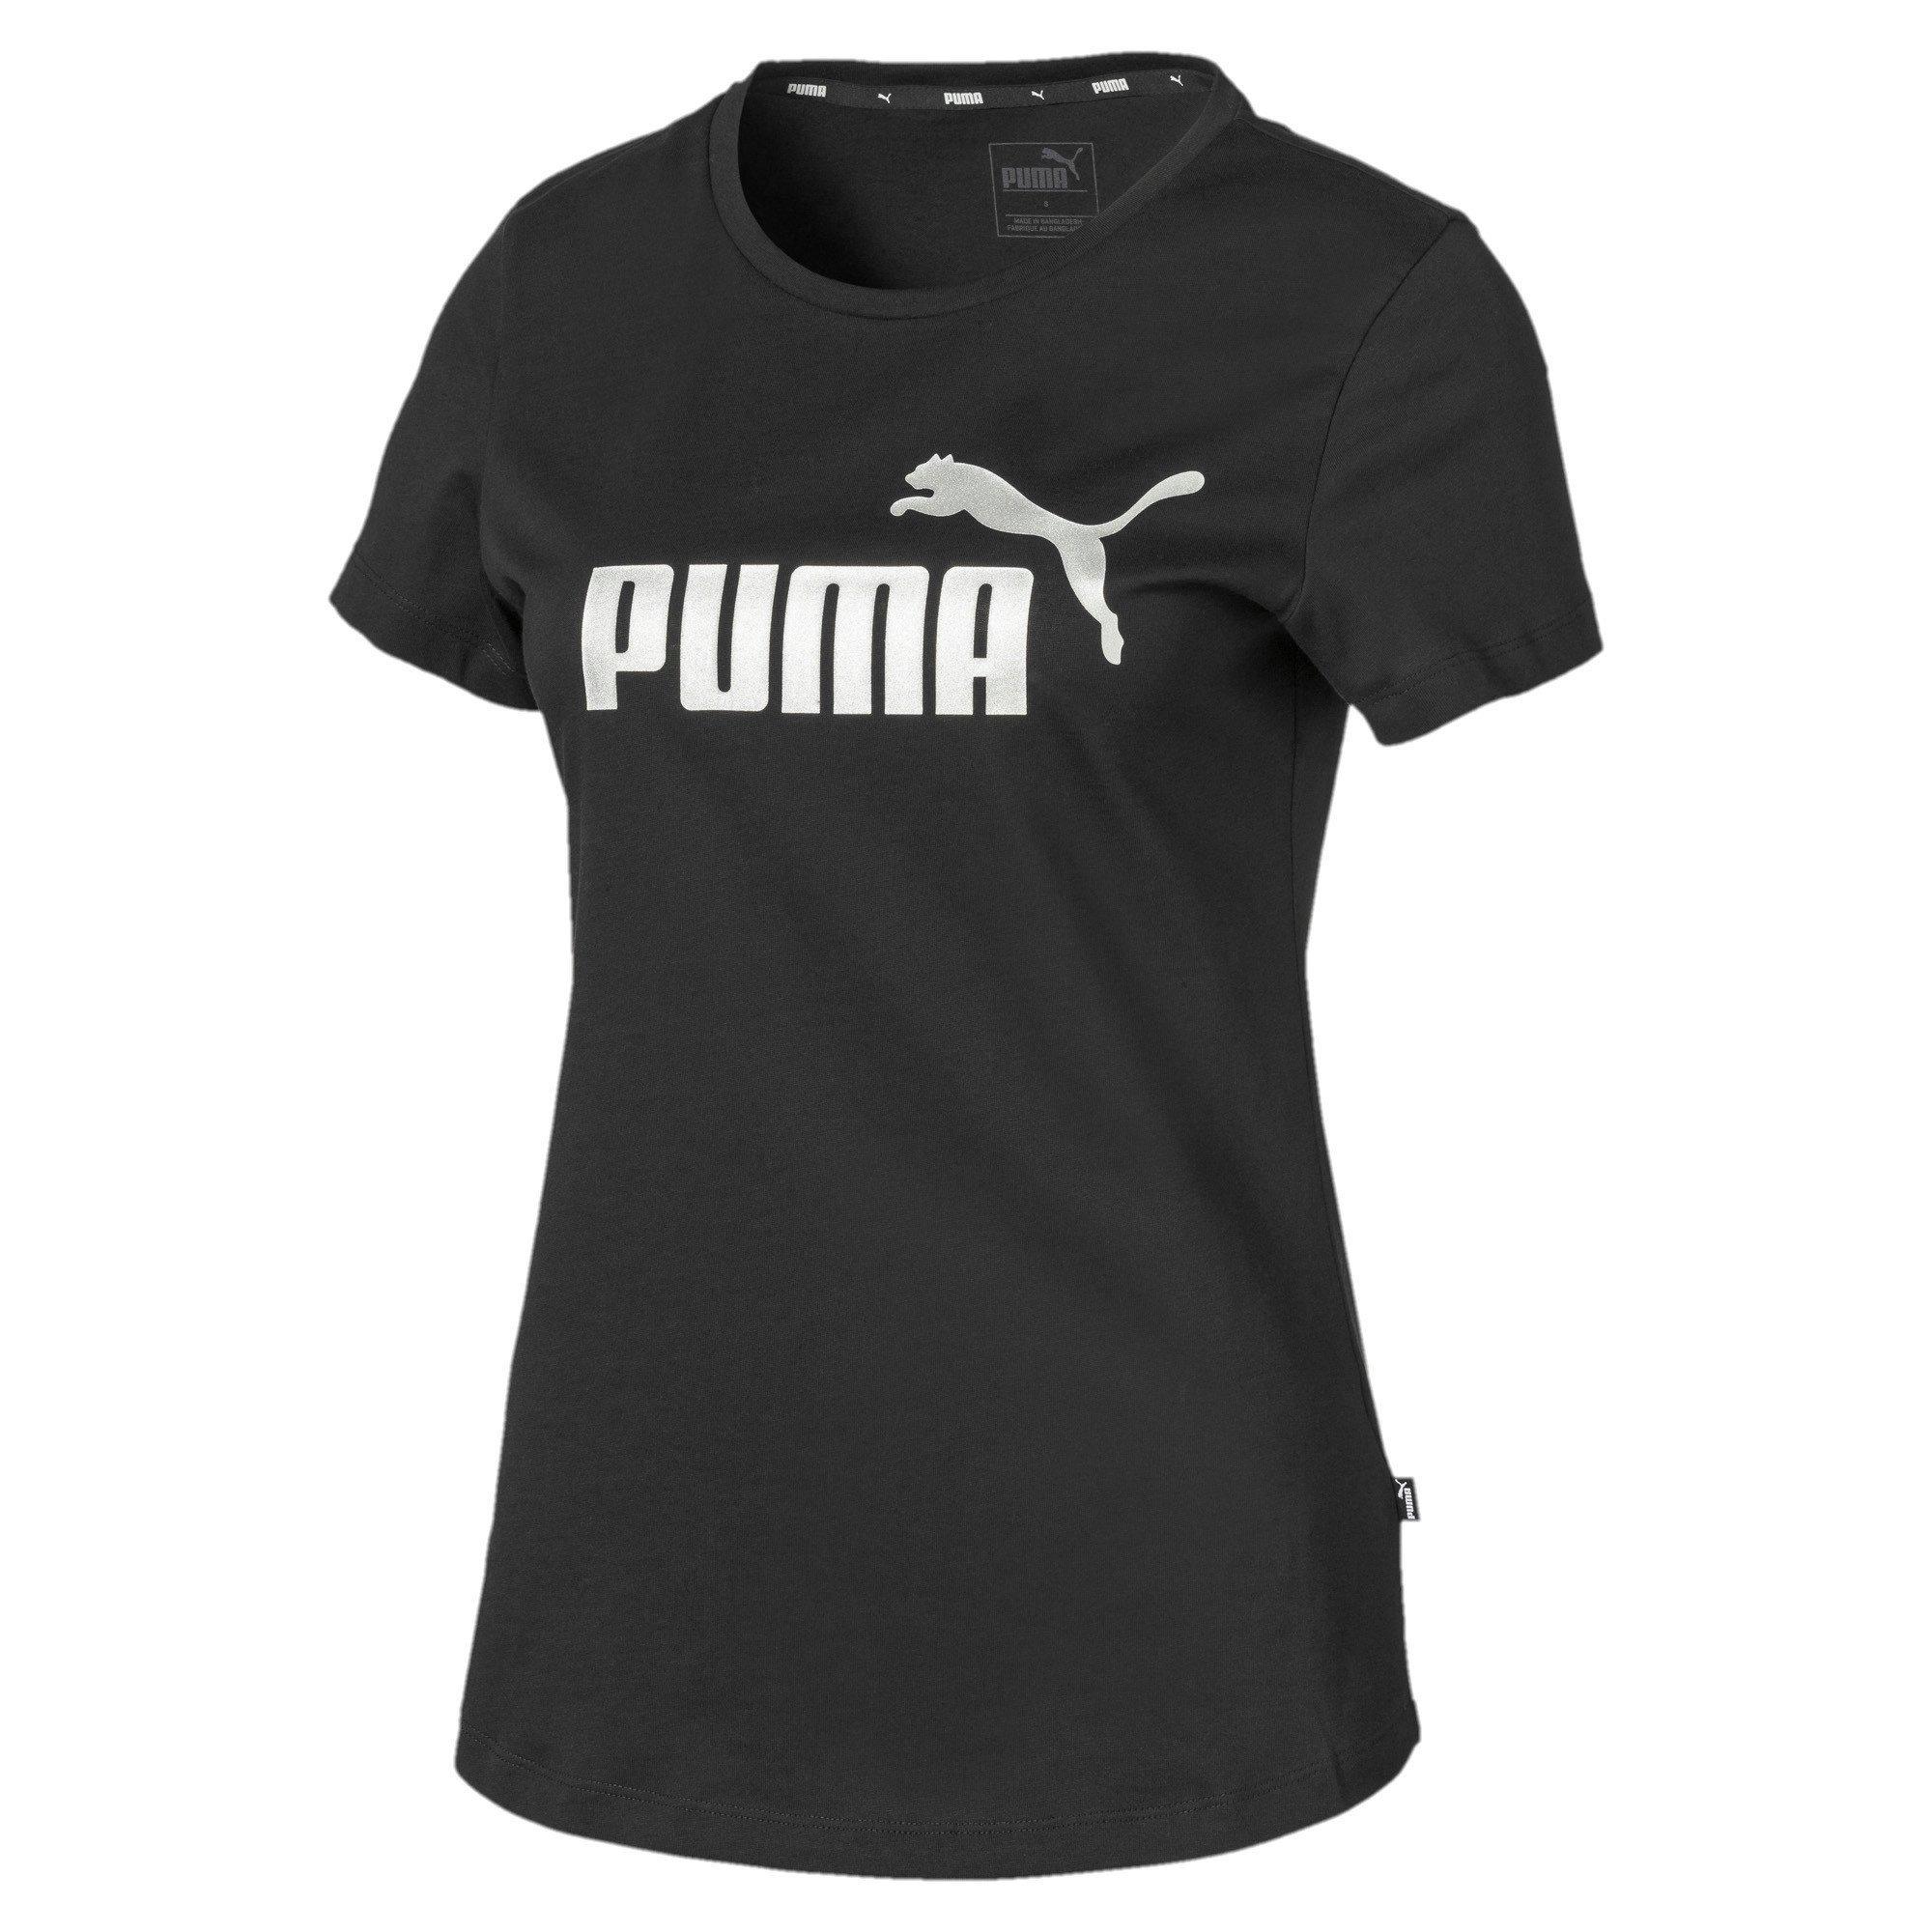 puma latest t shirts